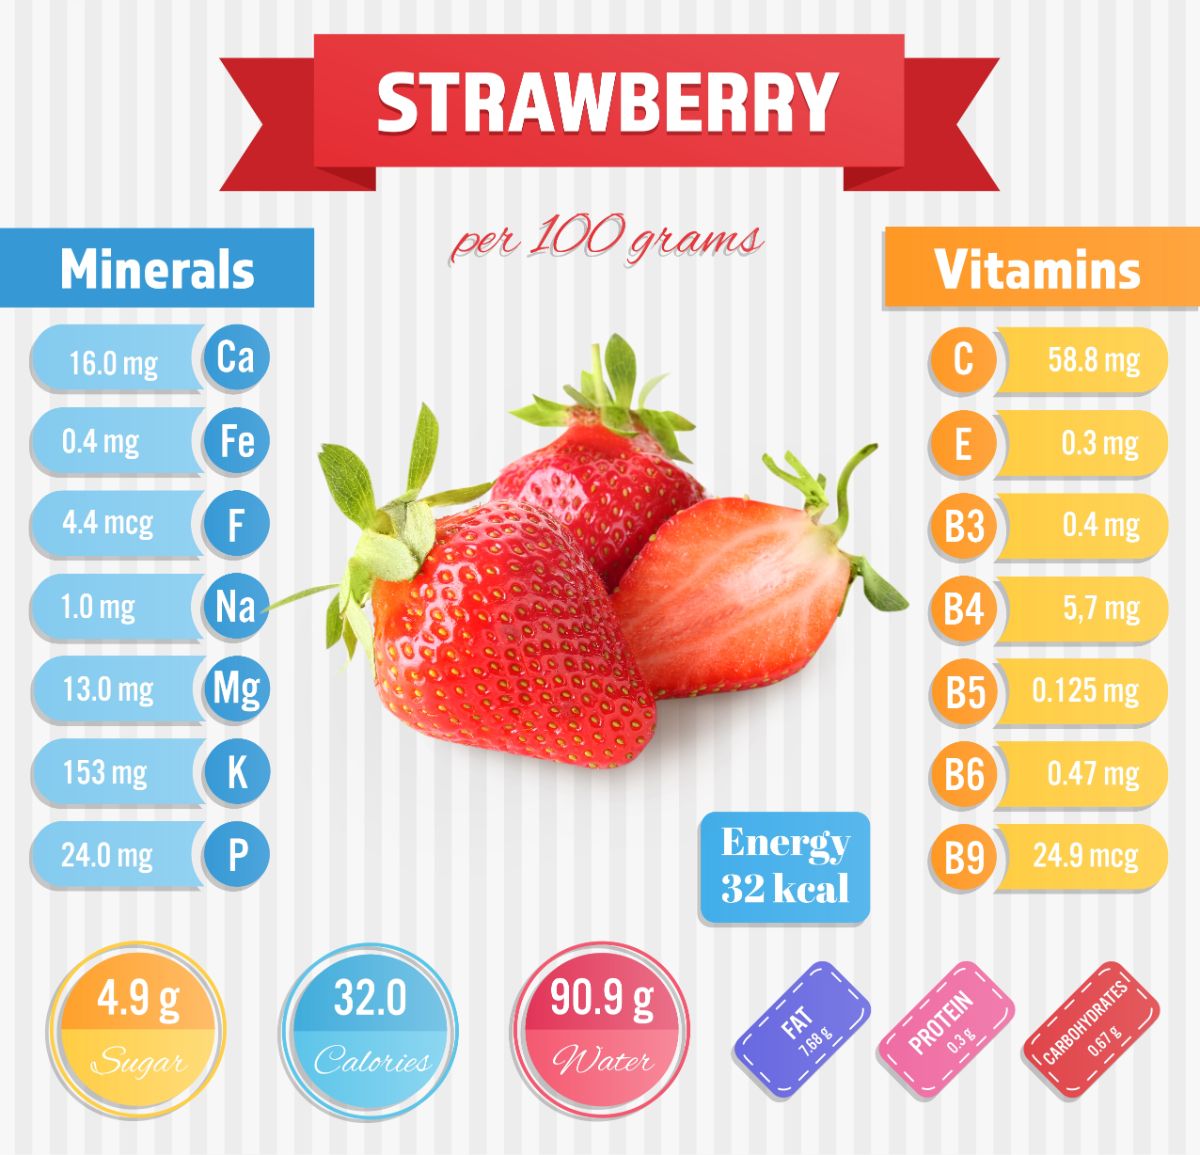 Strawberry minerals and vitamins per serving